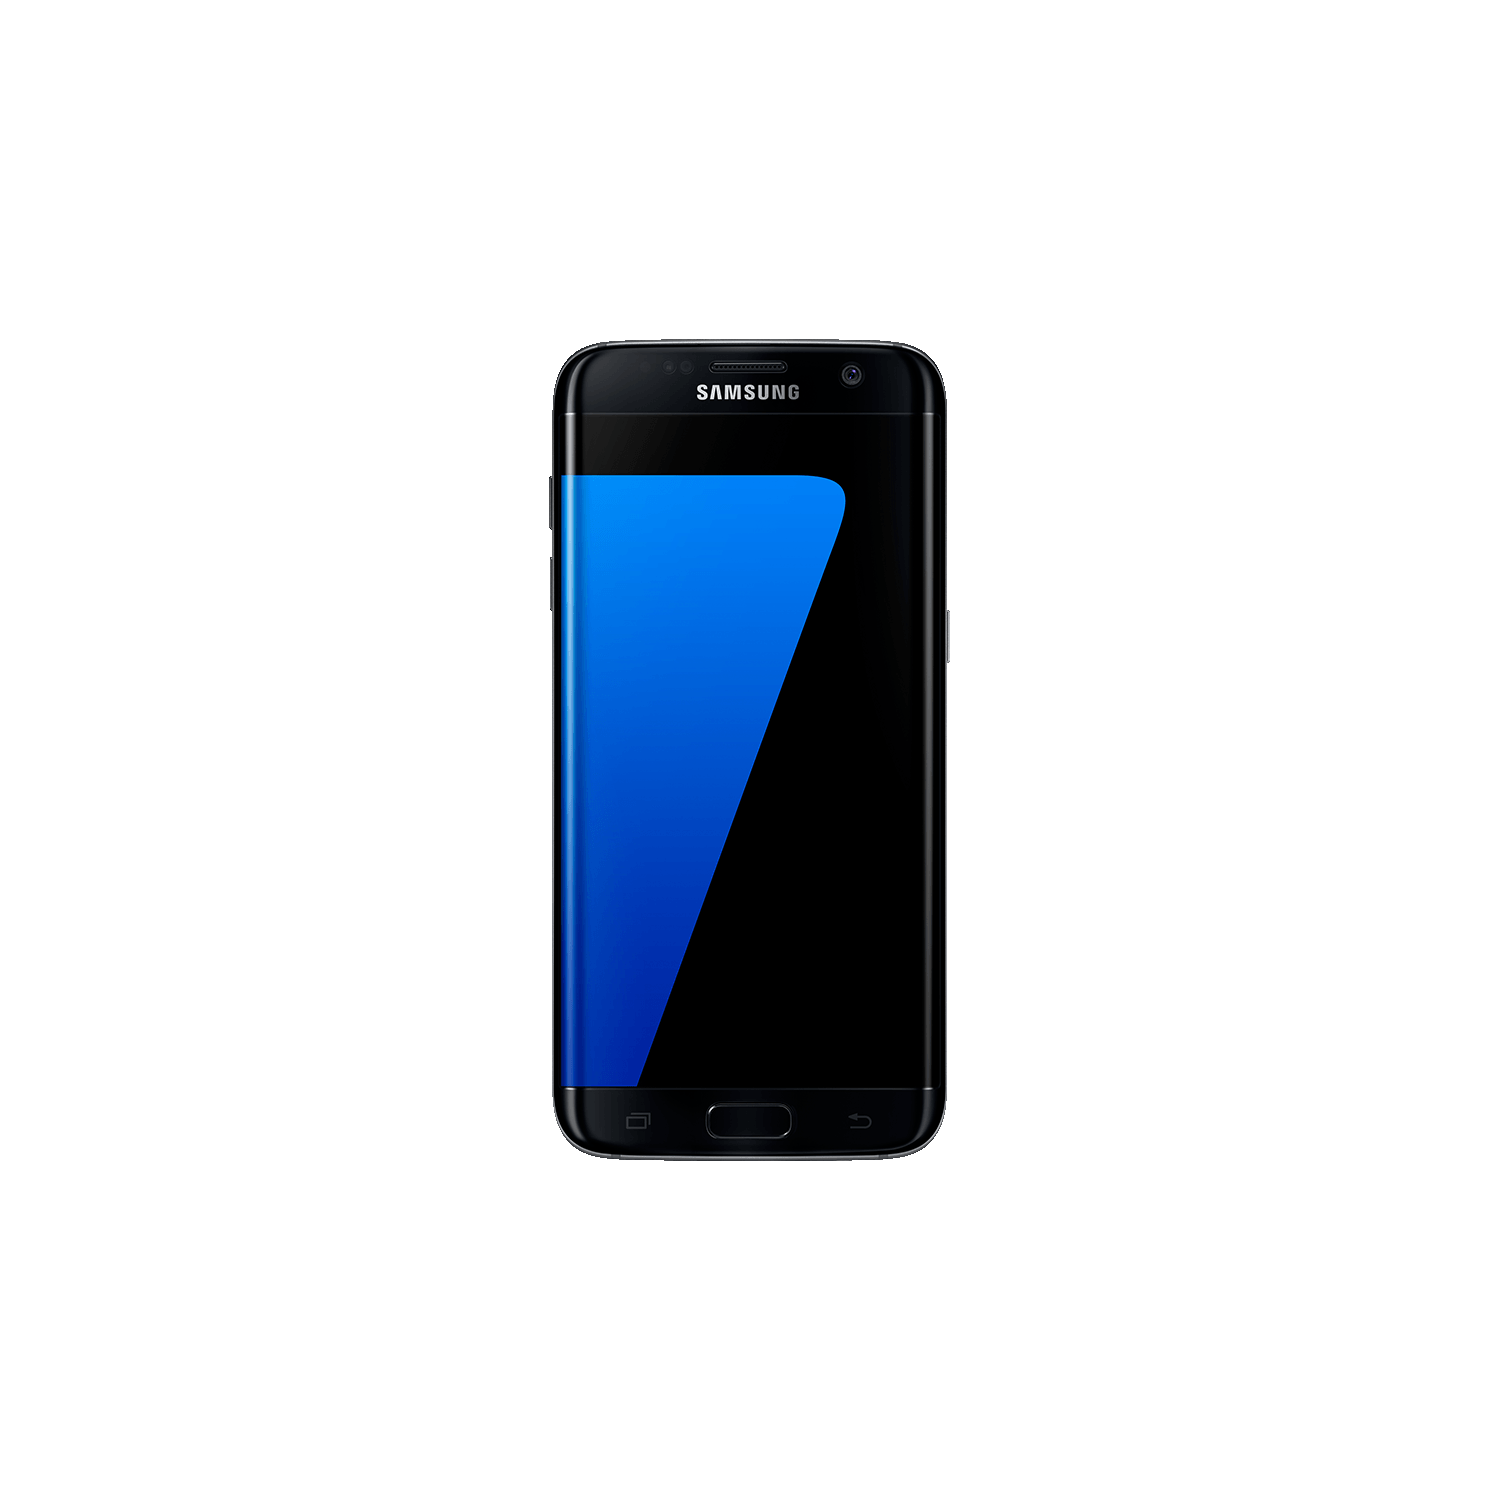 Refurbished (Excellent) - Samsung Galaxy S7 edge 32GB Smartphone - Black Onyx - Unlocked - Certified Refurbished